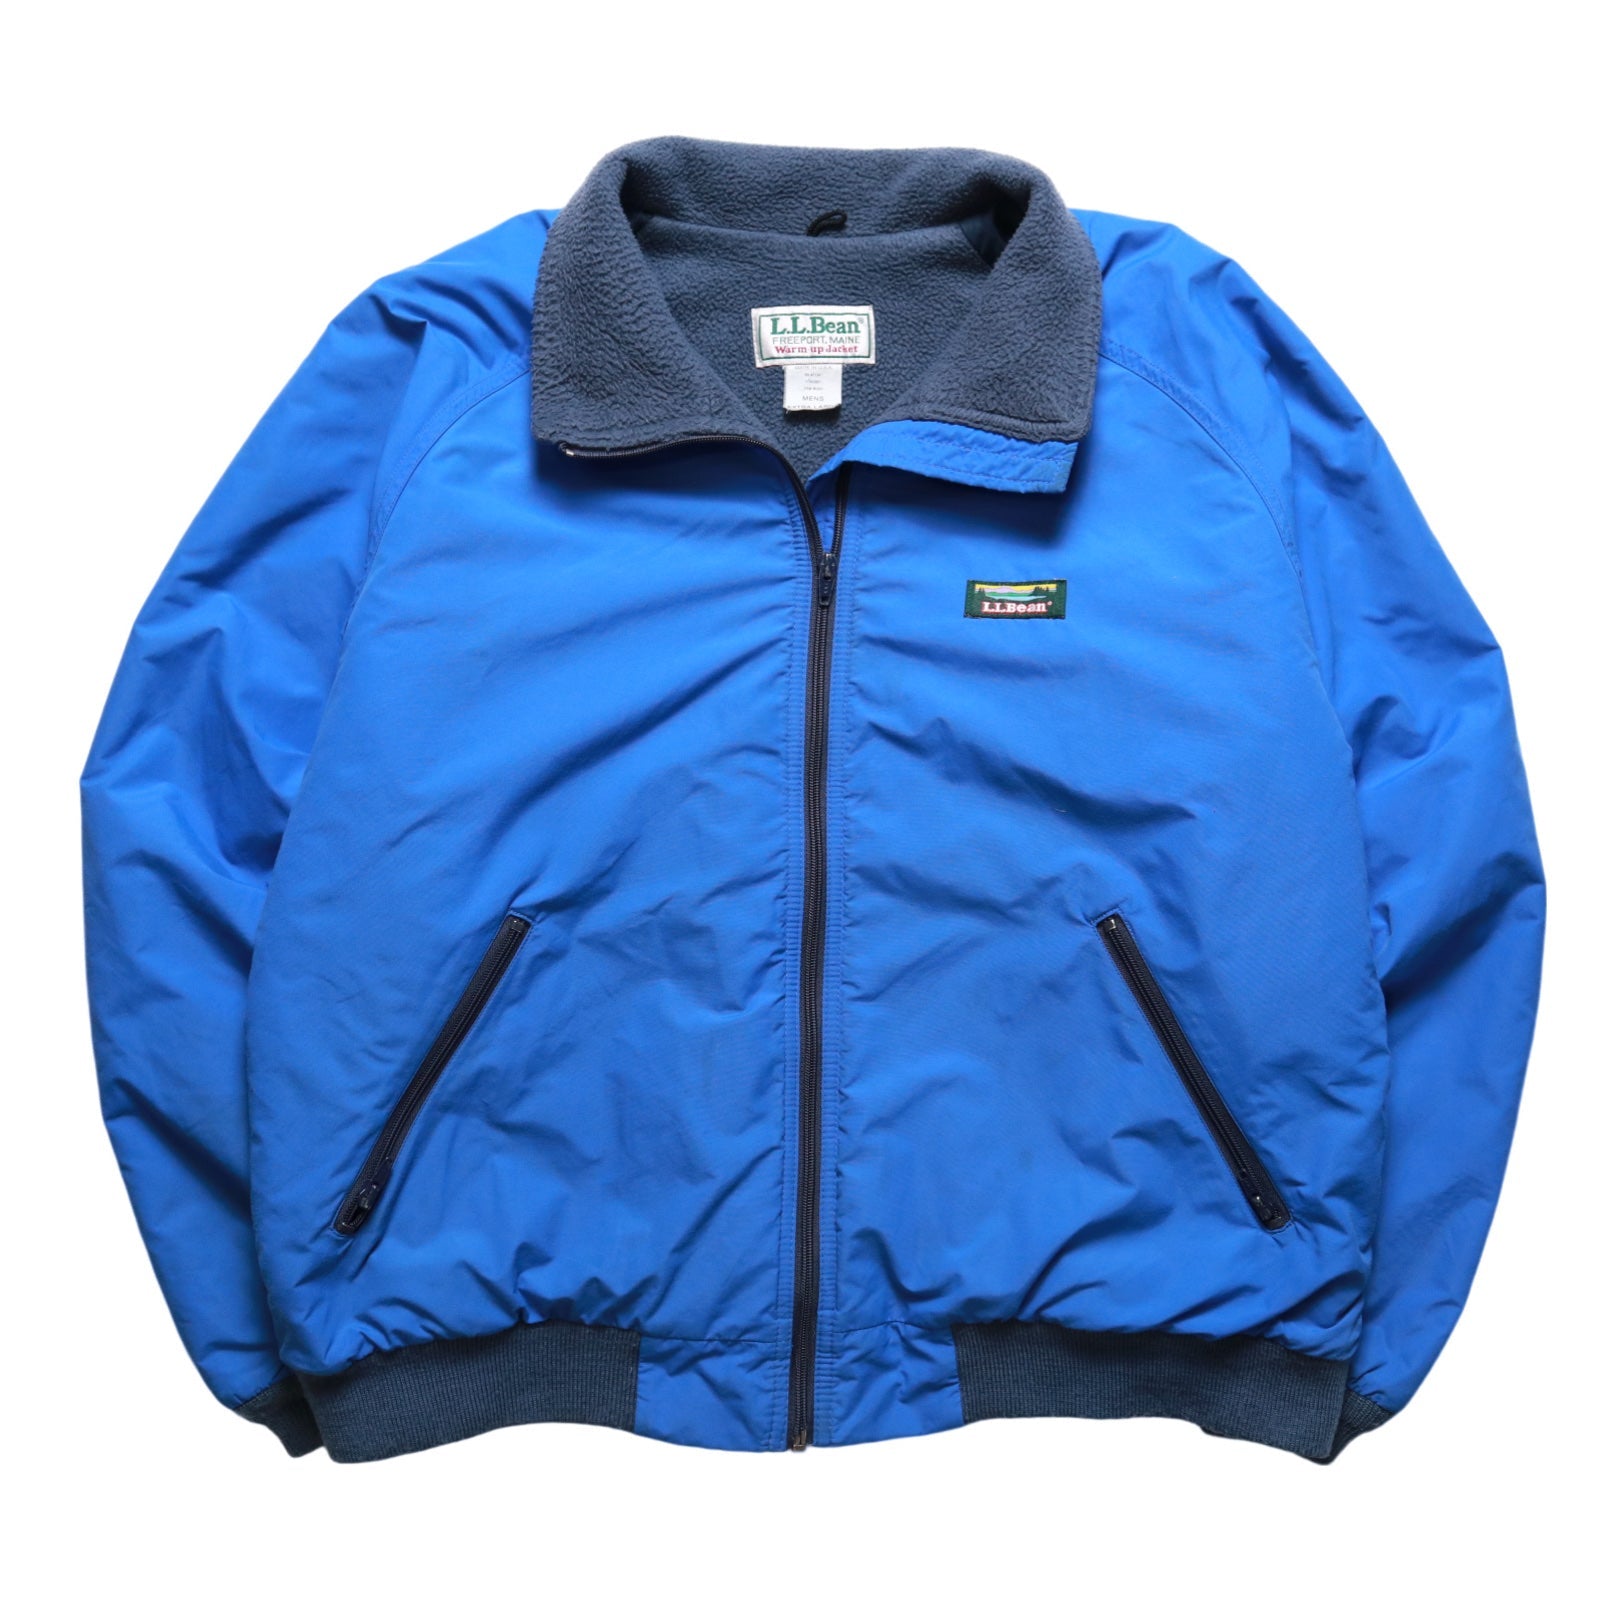 1980s LLBean American-made blue windproof warm jacket Warm